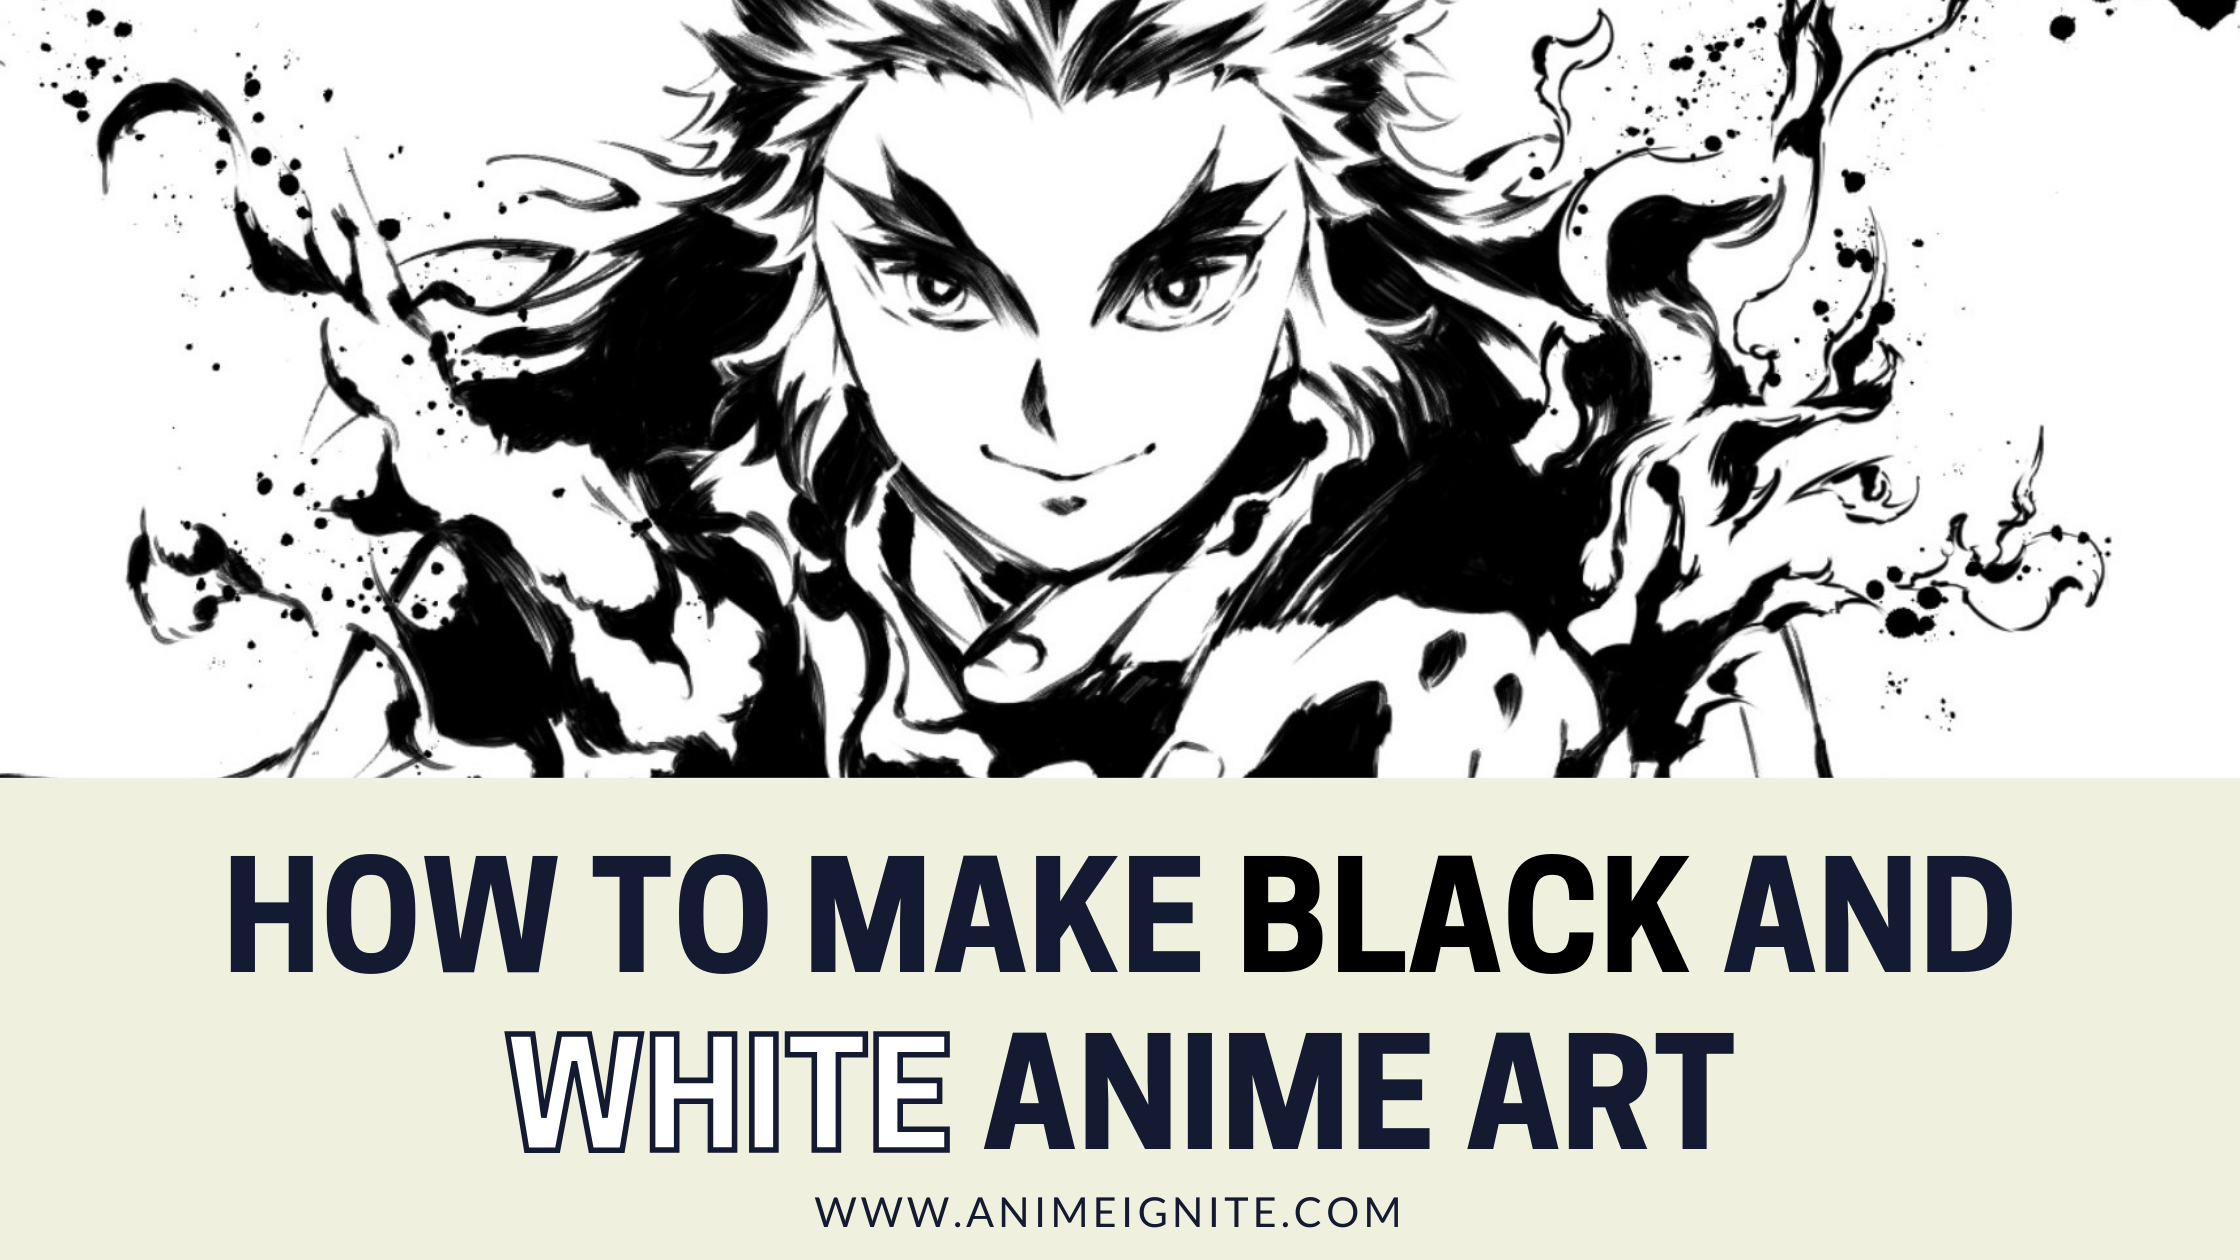 Black & White Anime Art - Four Cool Ways to Do It Yourself